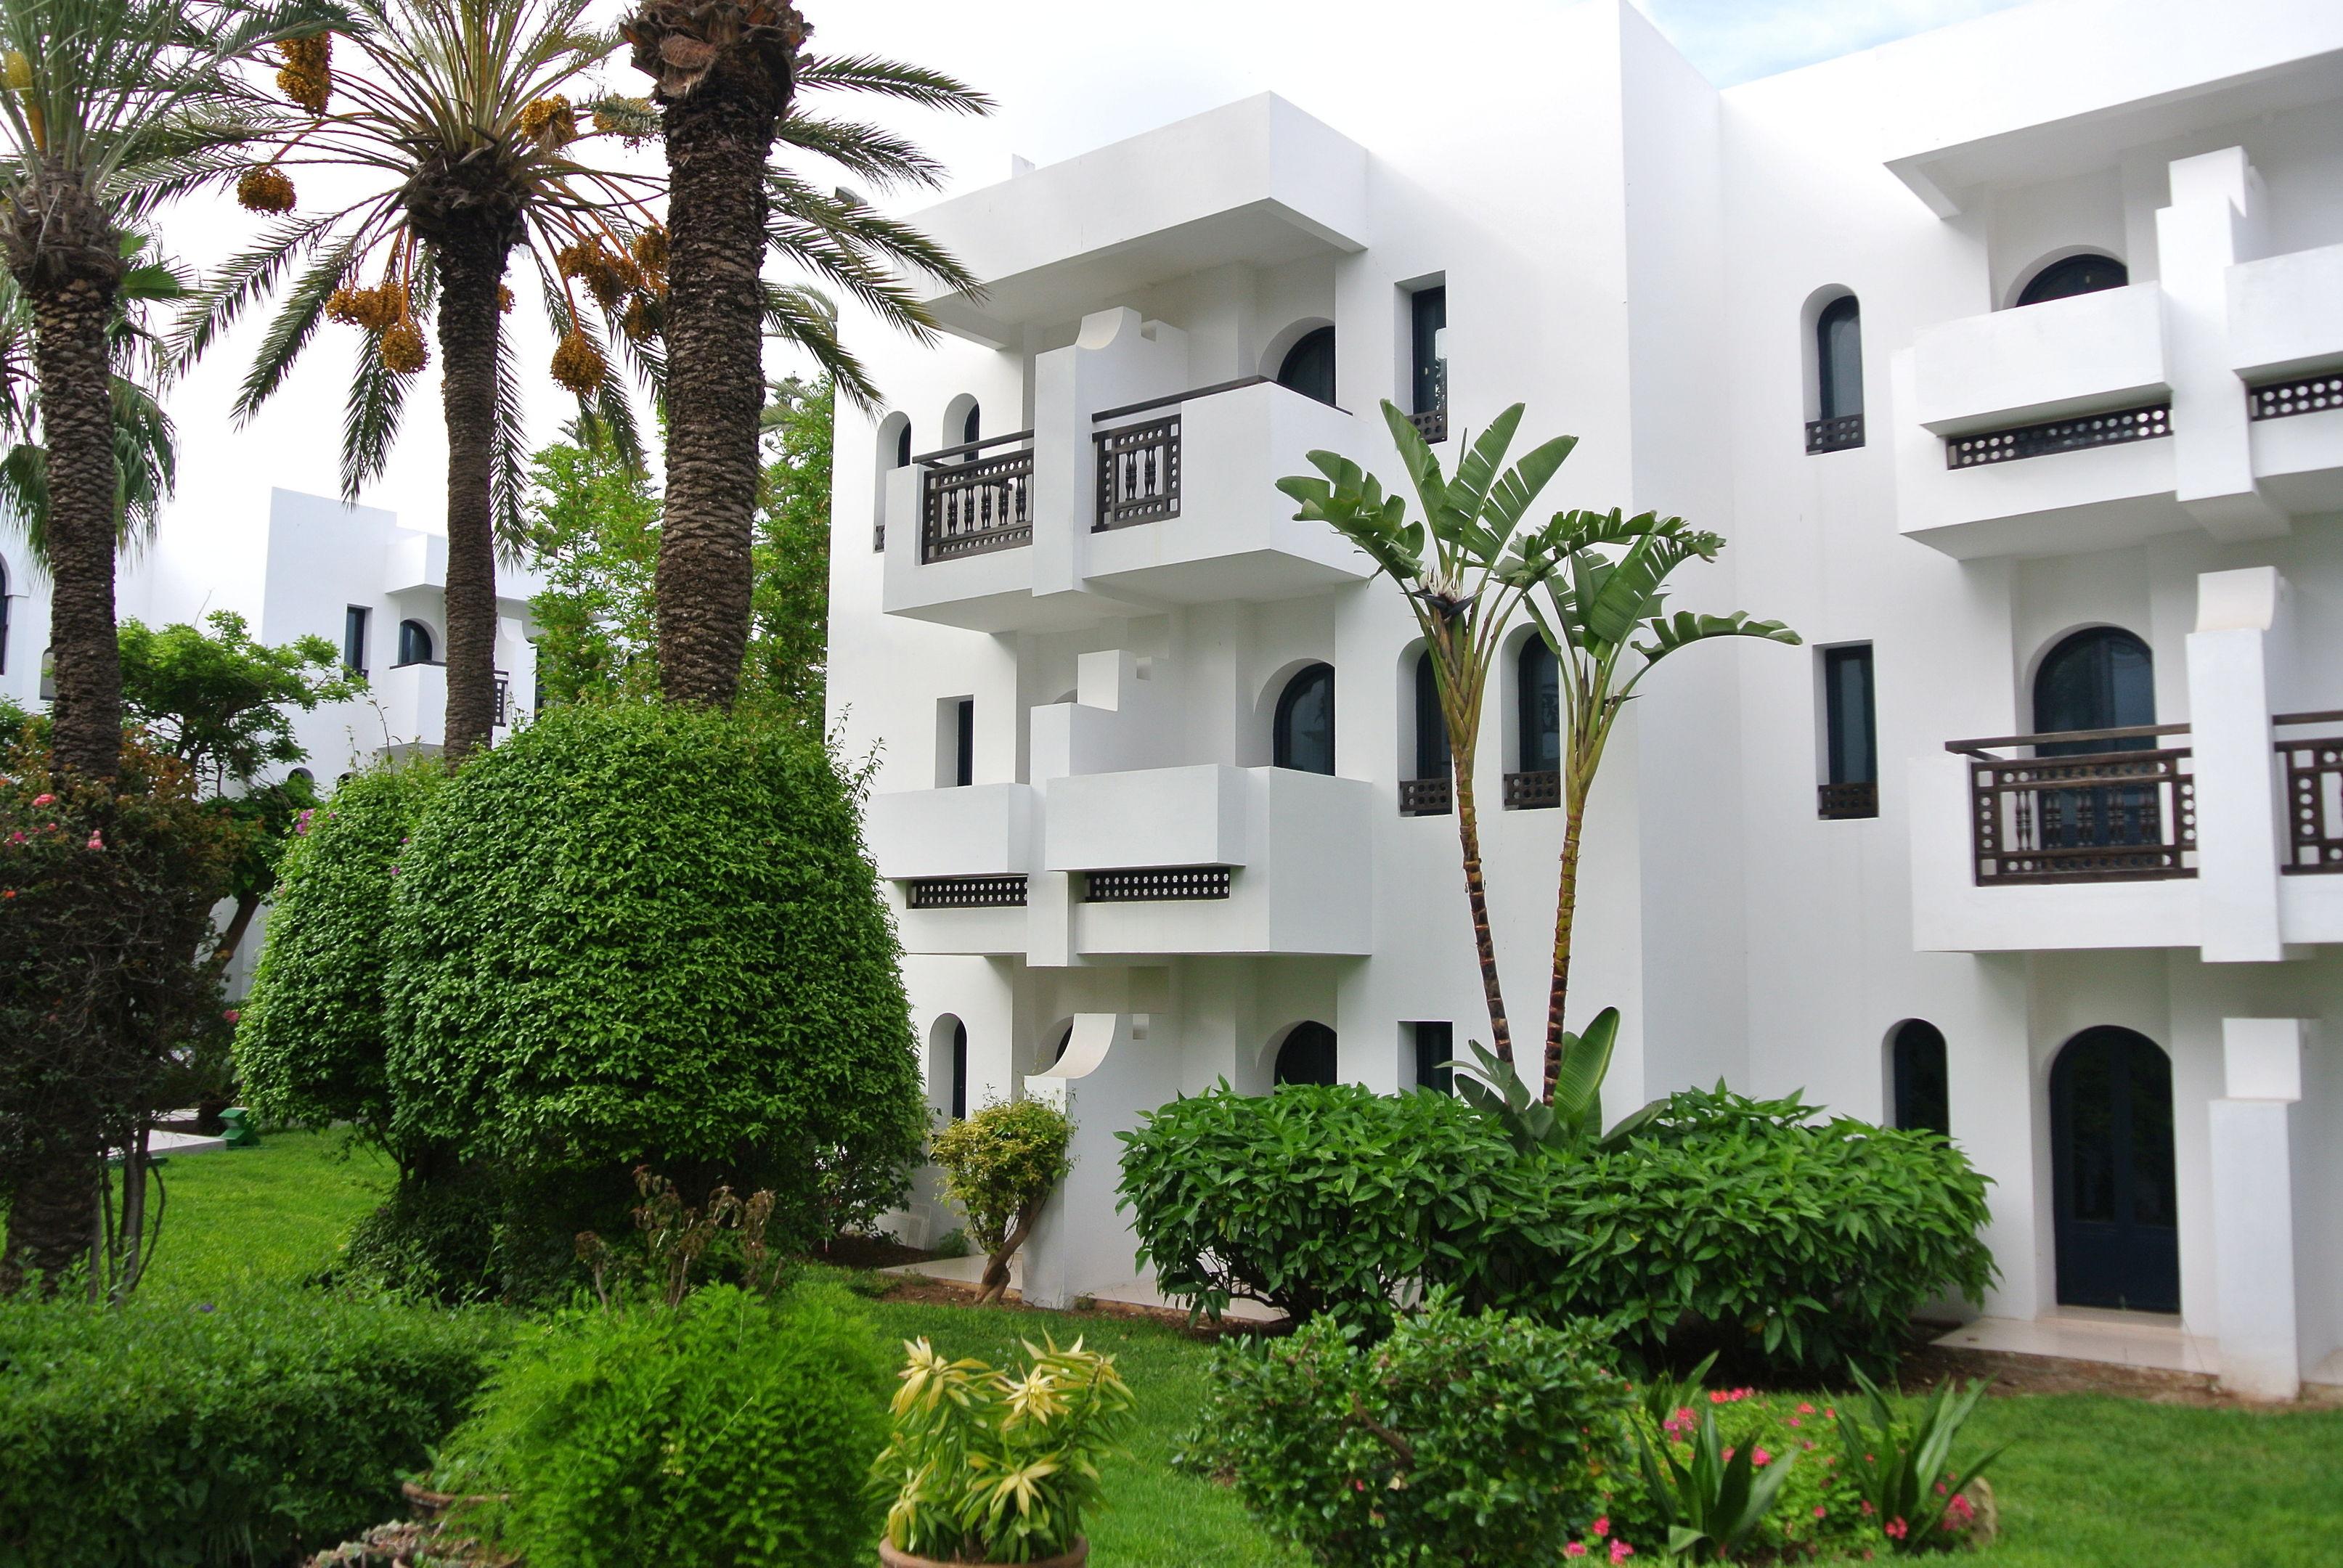 Les jardins d'Agadir Club